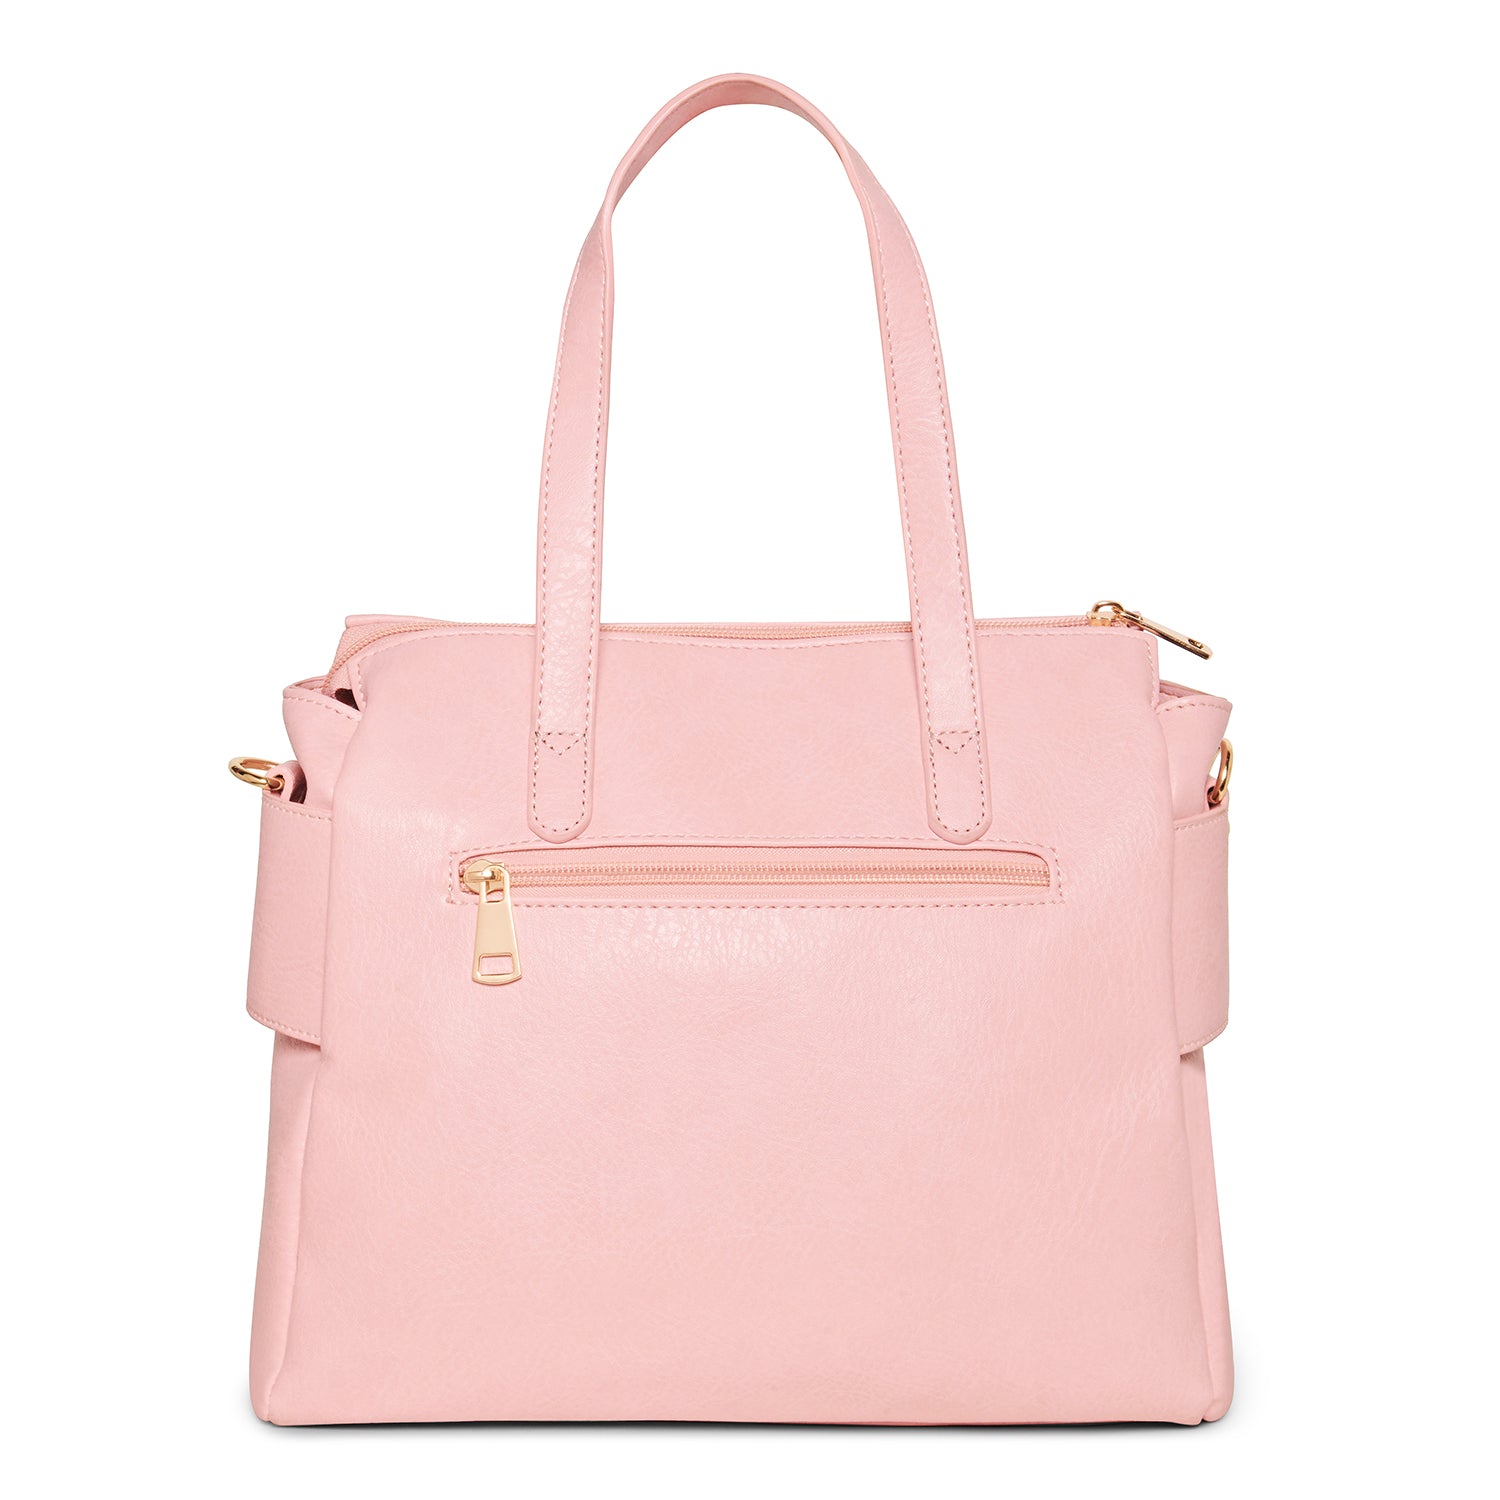 CAPRESE LENNY women's Tote Bag (NAVY), NAVY, L: Handbags: Amazon.com